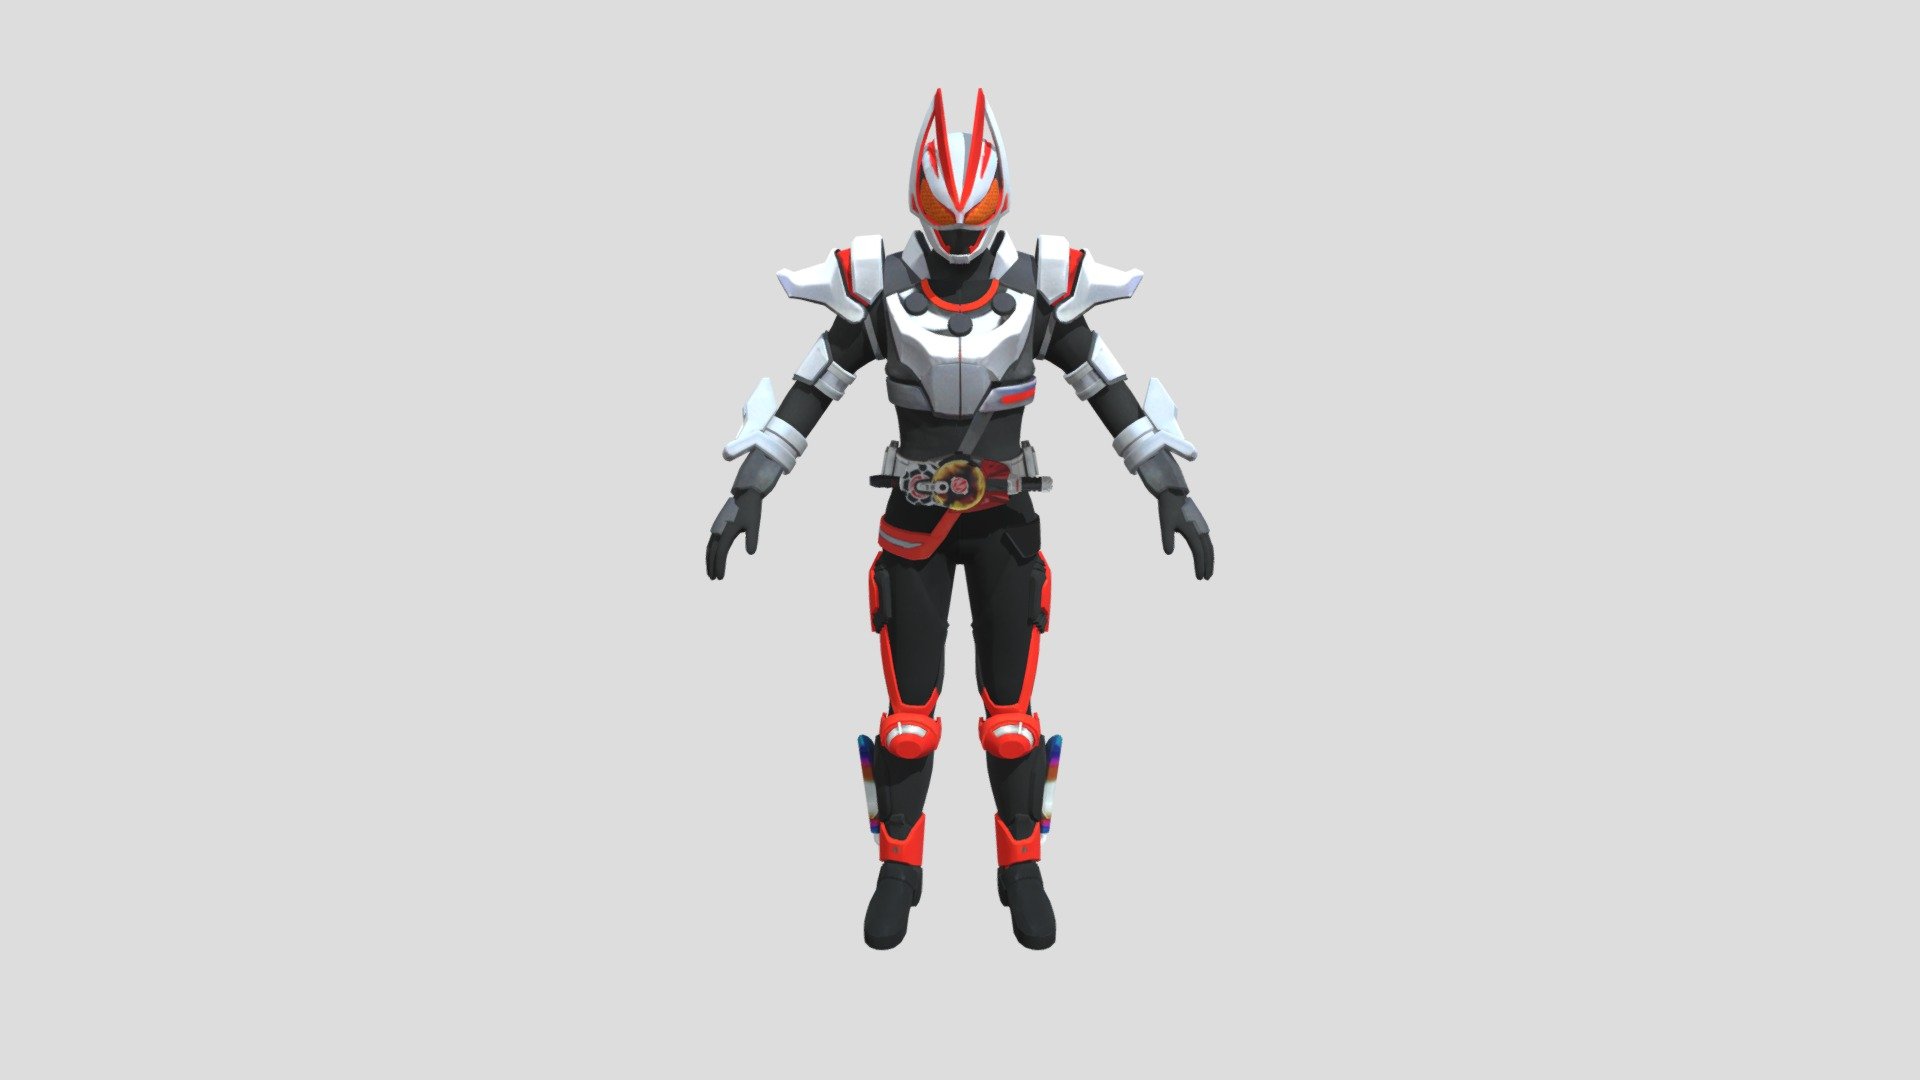 Kamen Rider Geats Magnum Boost Form |
Contact me : 
 - Discord : tln606
 - Mail : tlnintelligent@gmail.com - Kamen Rider Geats - 3D model by Kaizer (@kaizer606) 3d model